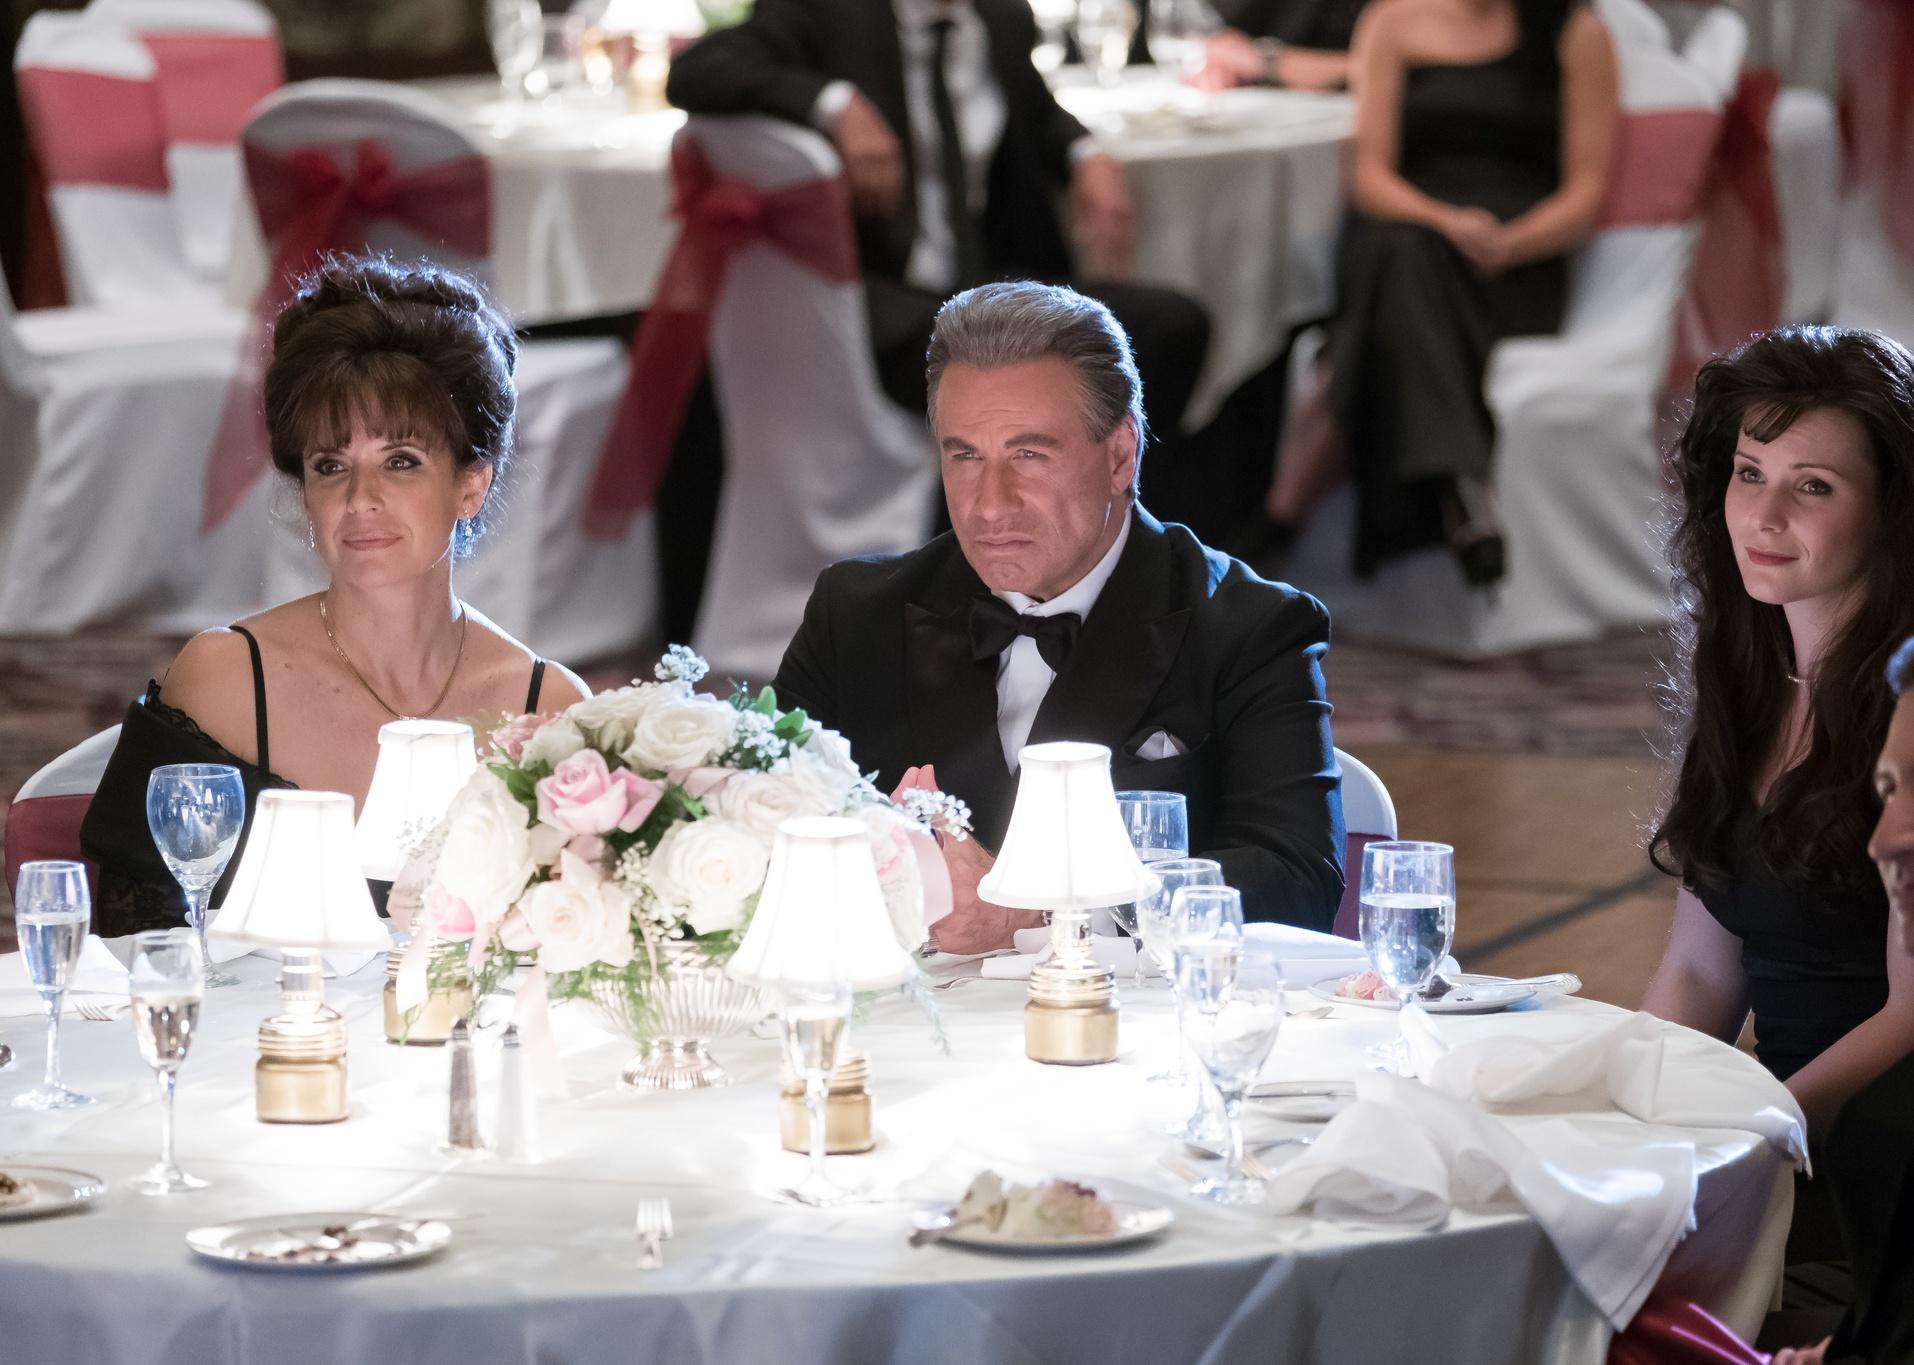 John Travolta and Kelly Preston dressed up at a dinner event.